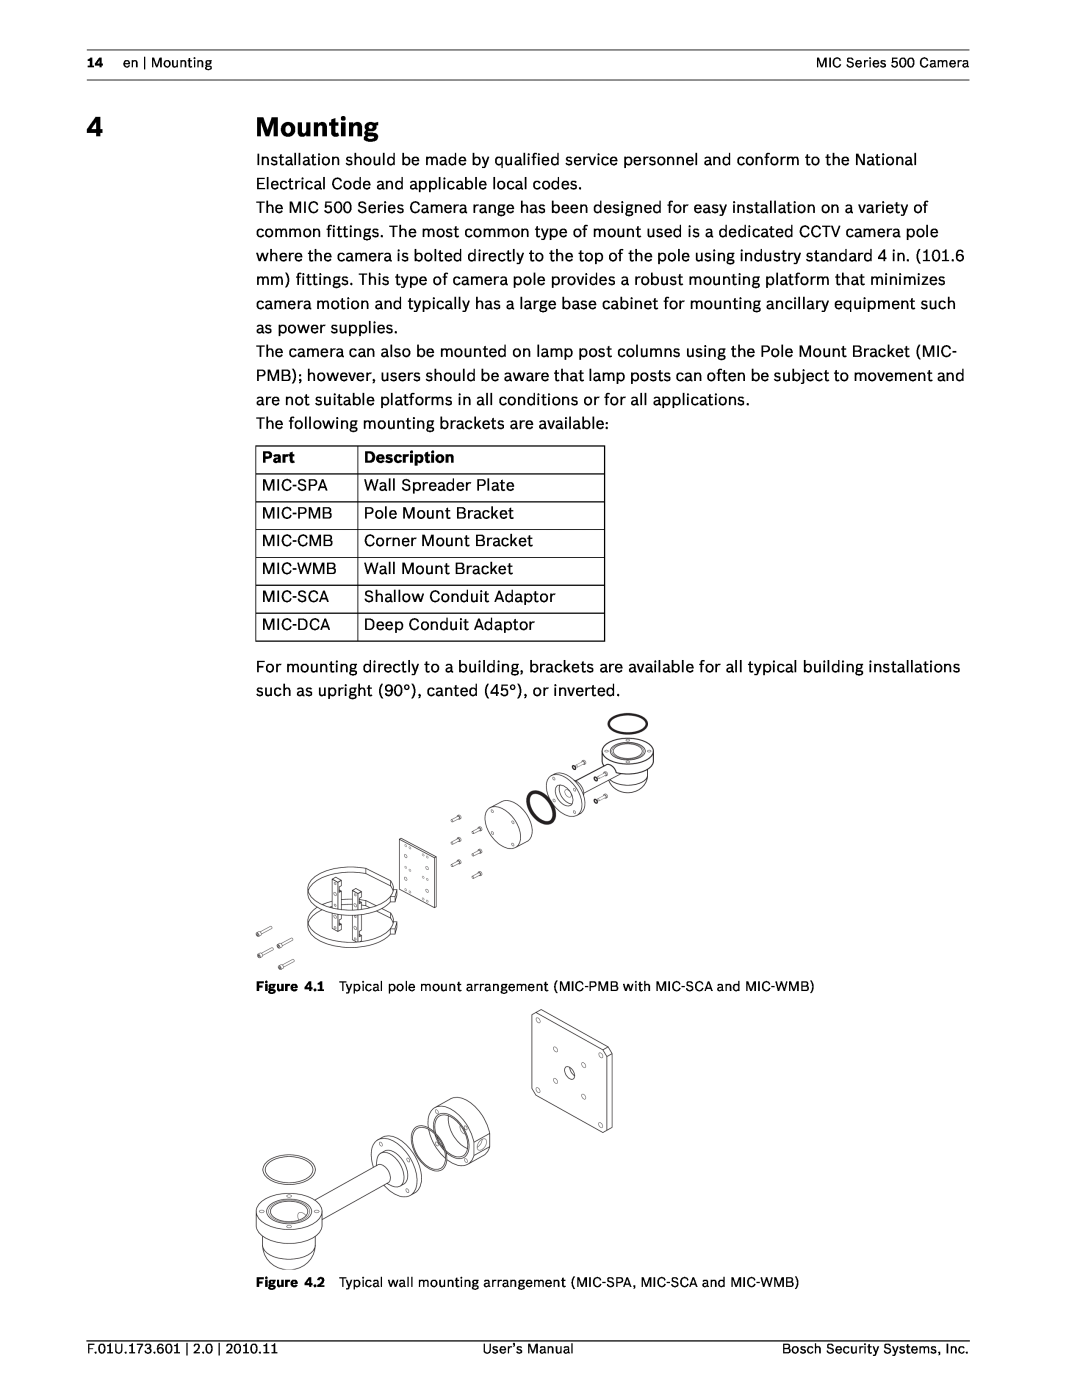 Bosch Appliances 500 user manual 4Mounting, Part, Description 